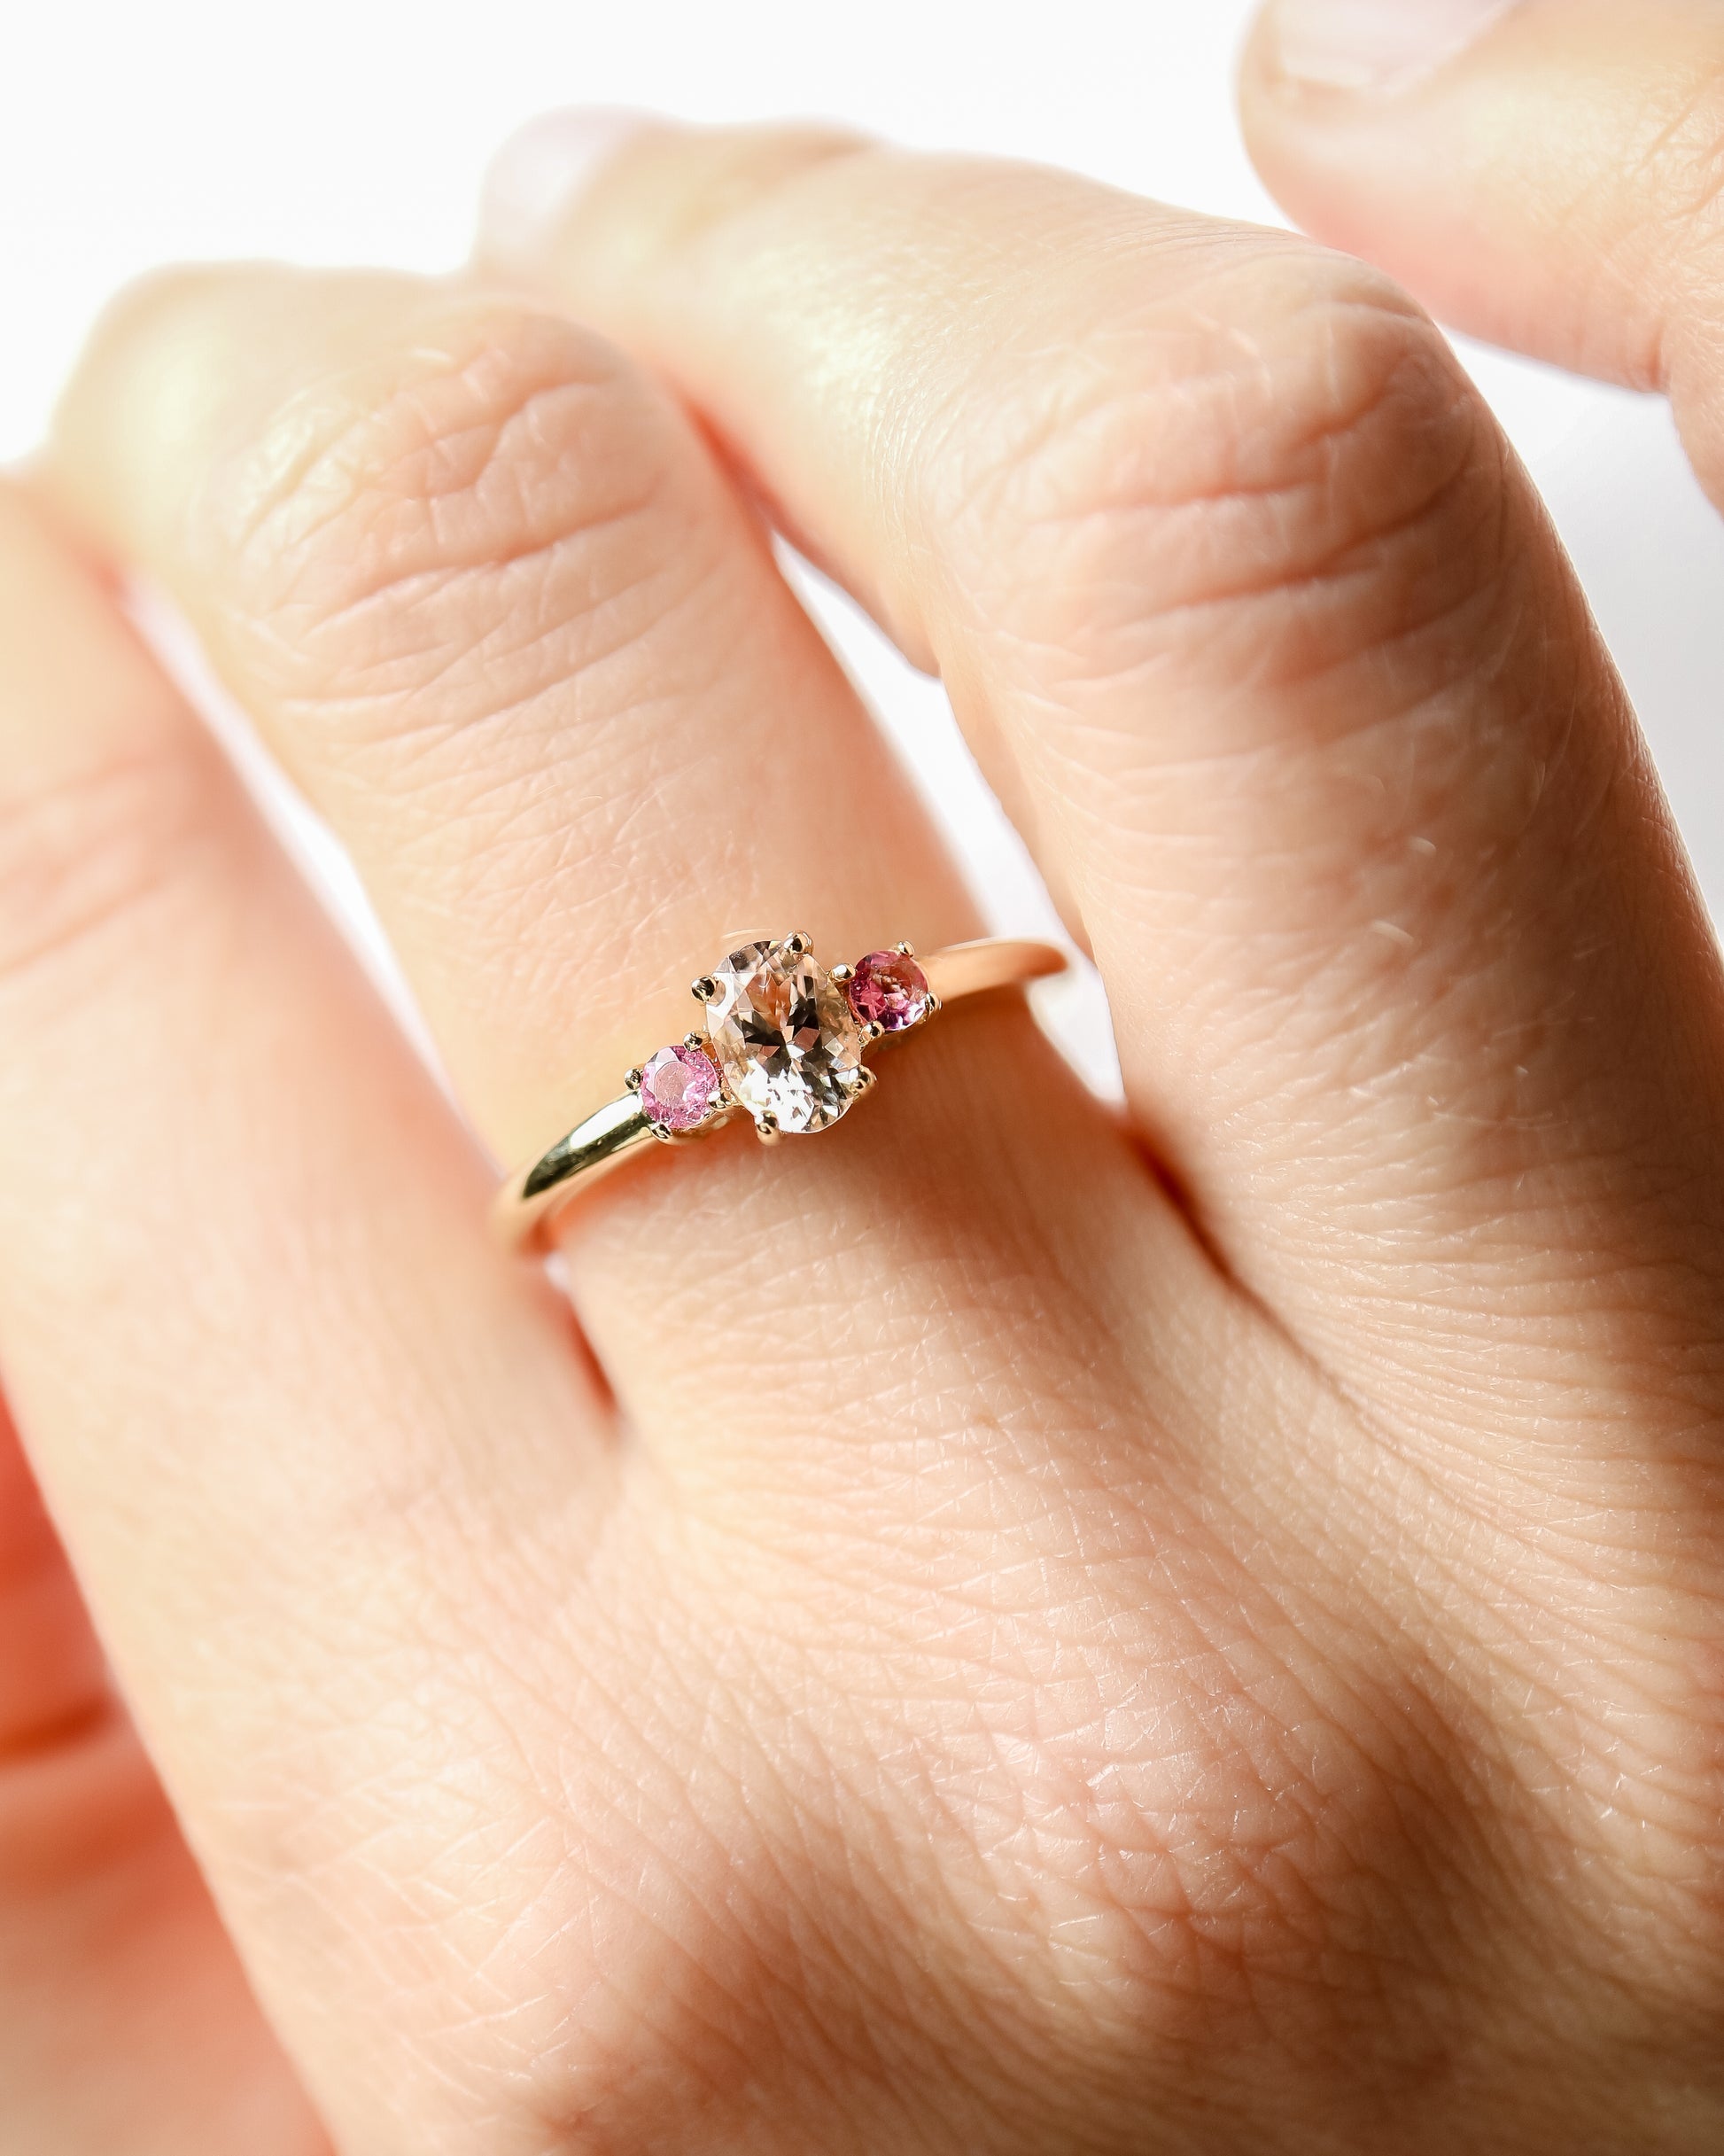 9ct gold Morganite and pink tourmaline Ballerina Ring